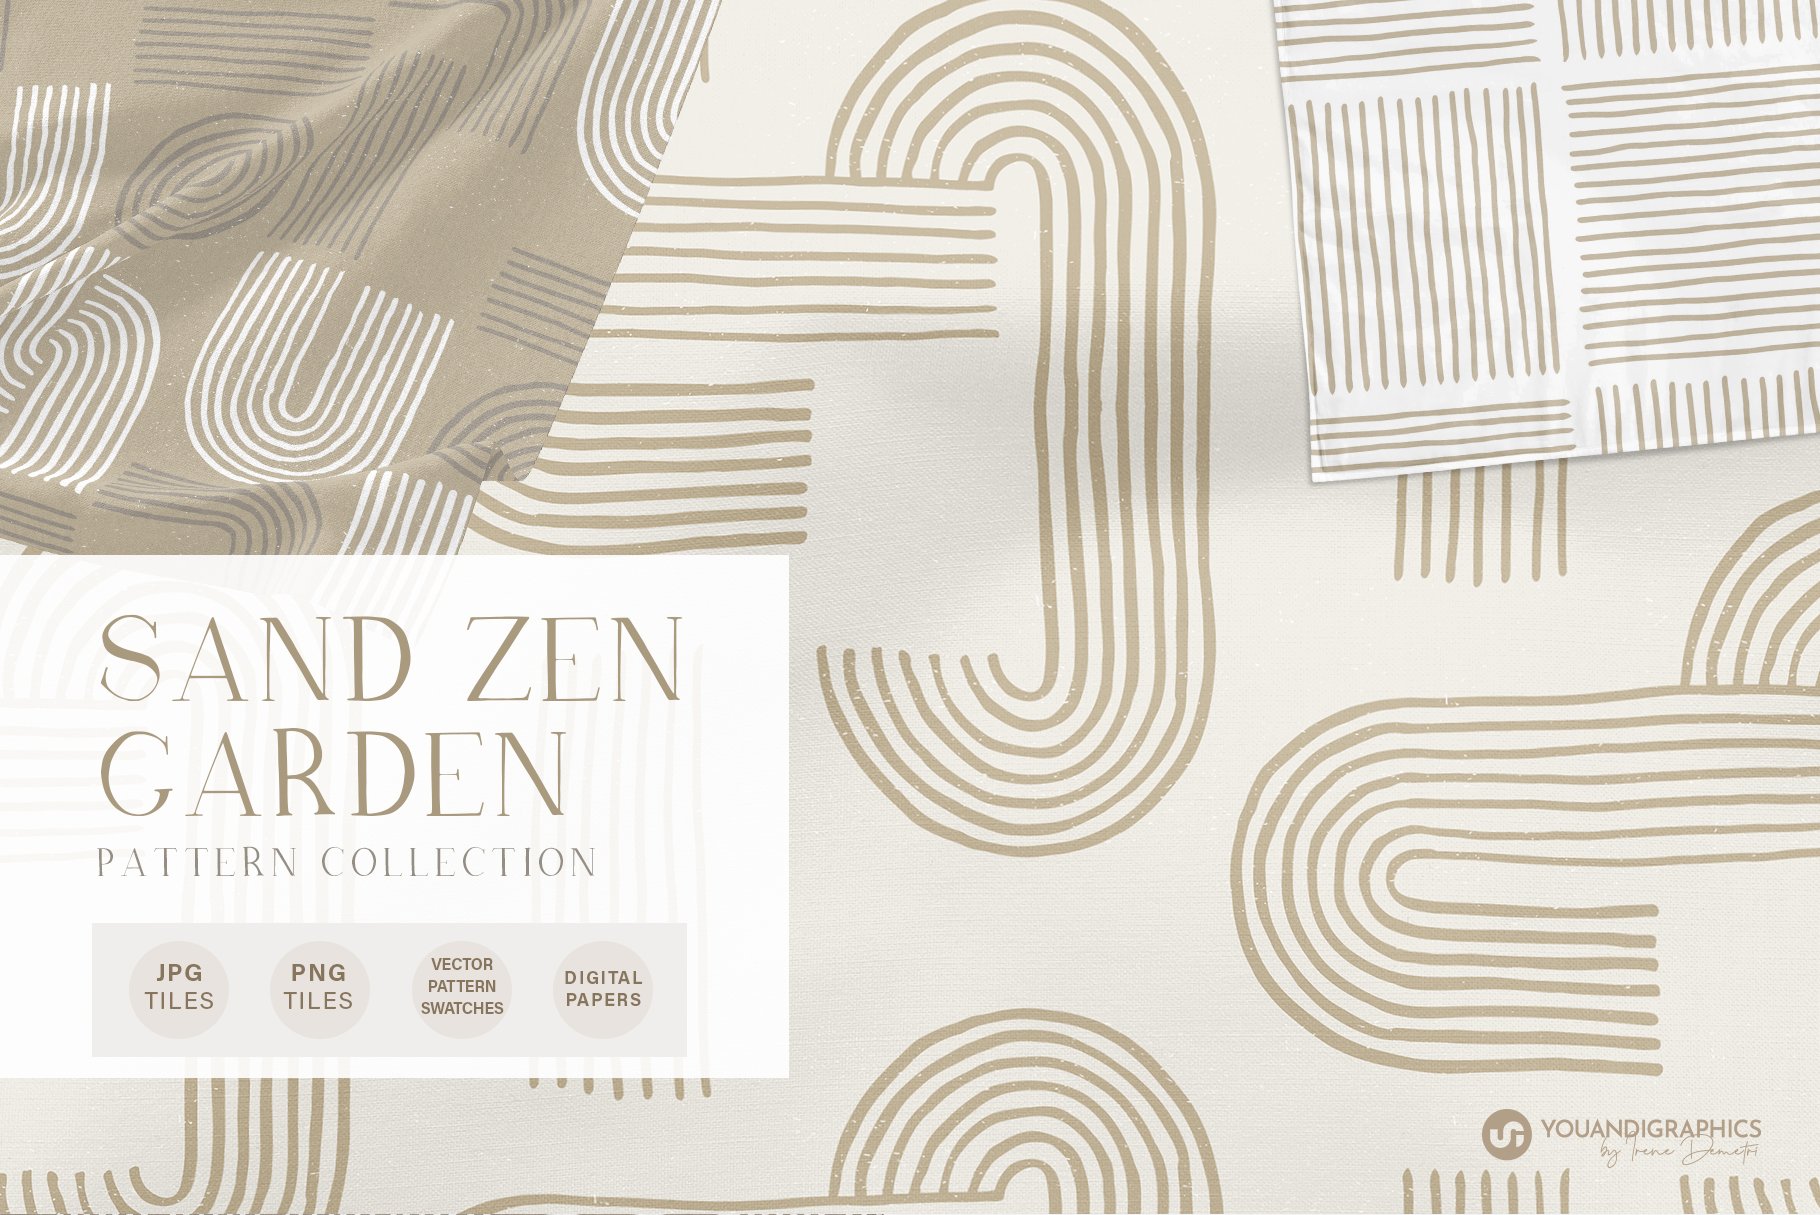 Sand Zen Garden - Seamless Patterns cover image.